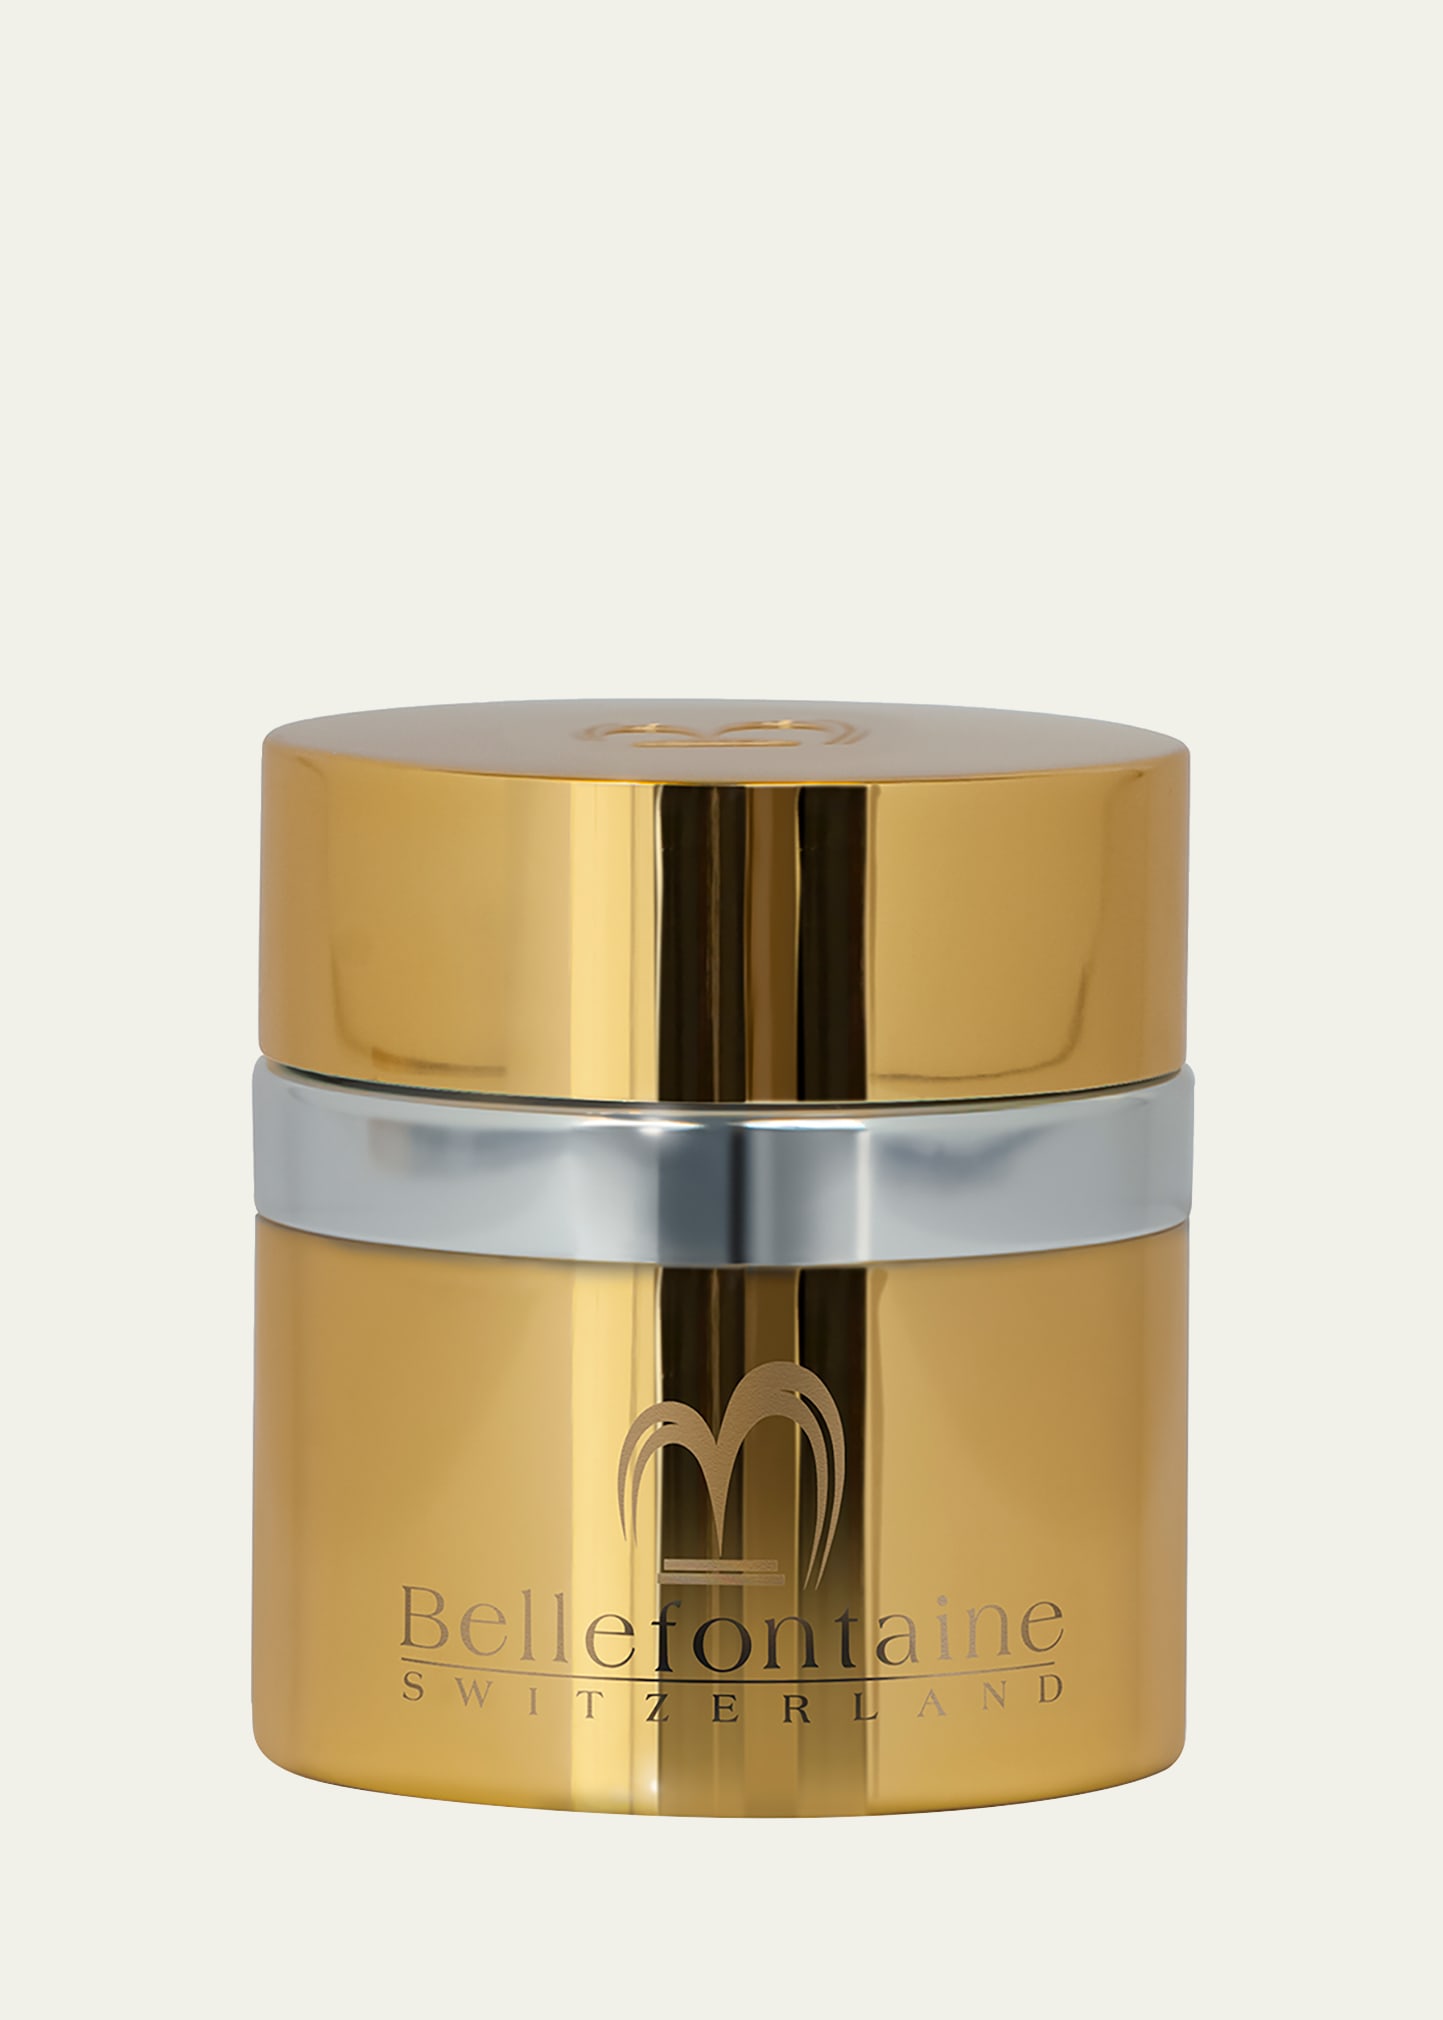 Bellefontaine Cellstemine 24h Repair Cream To Replenish